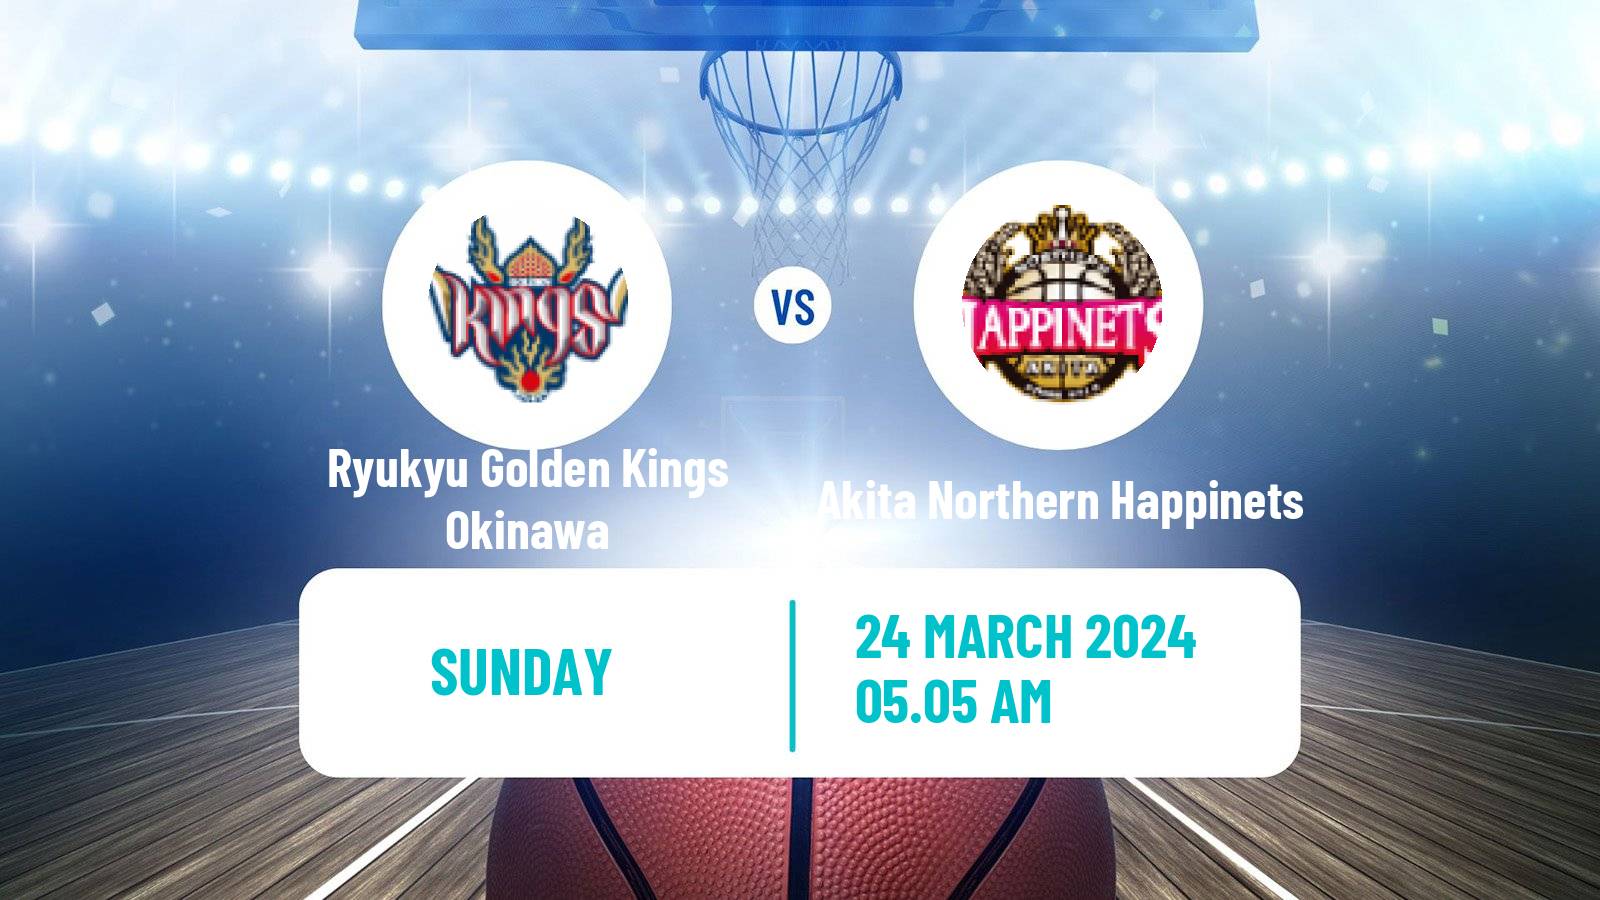 Basketball BJ League Ryukyu Golden Kings Okinawa - Akita Northern Happinets